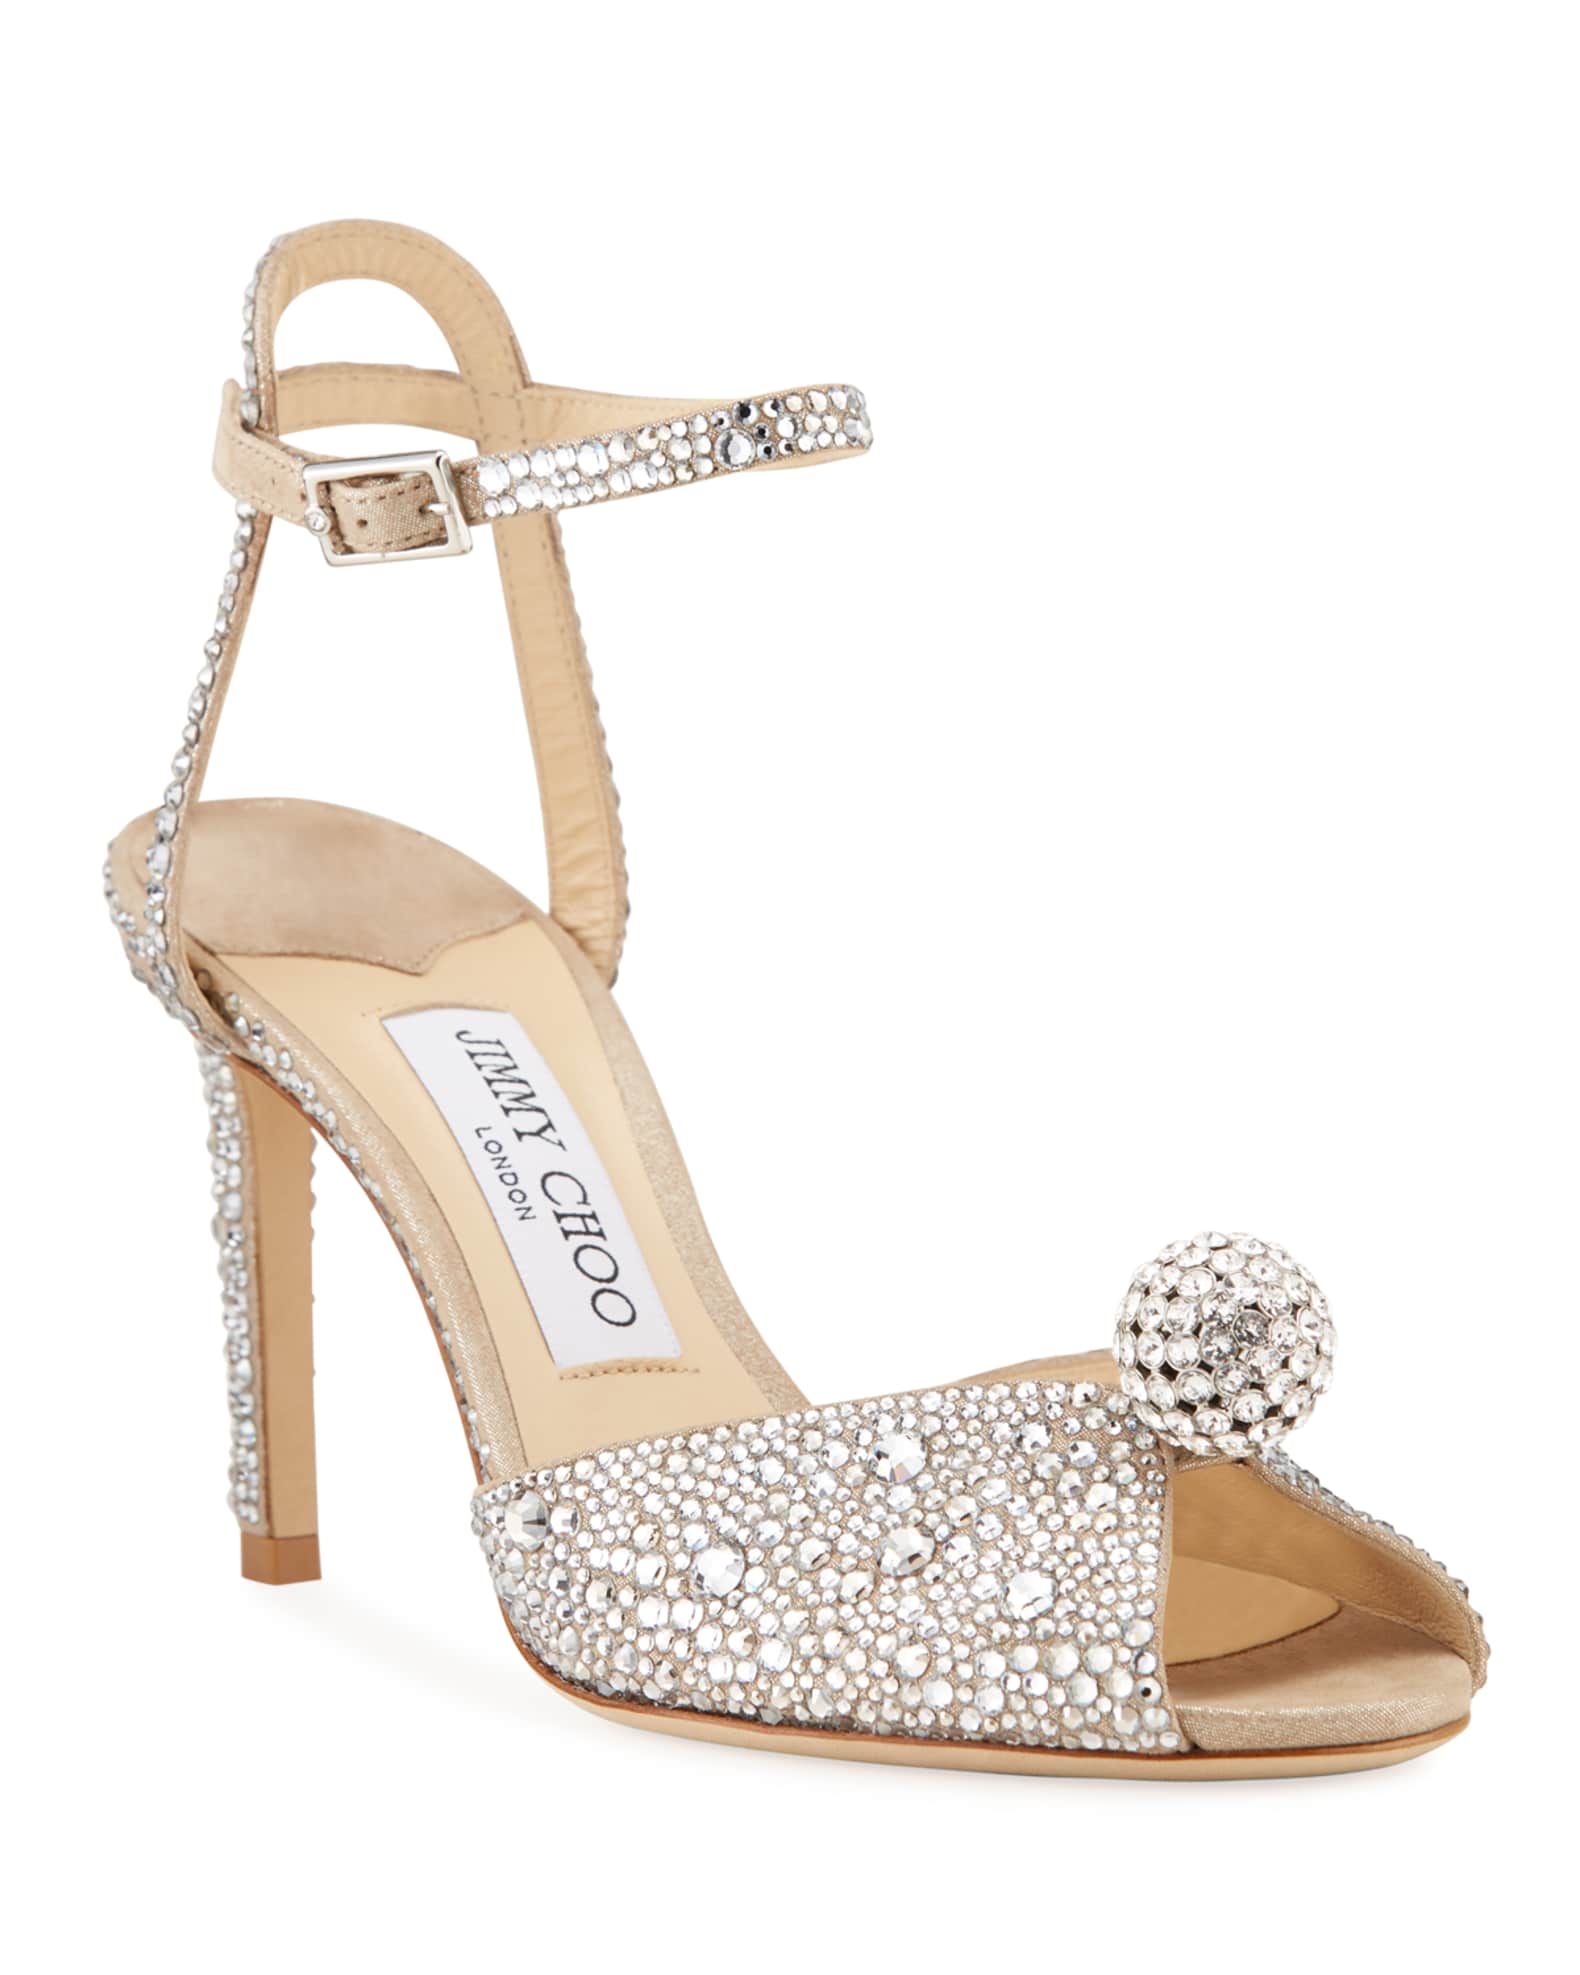 Jimmy Choo Sacora Crystal-Embellished High-Heel Sandals | Neiman Marcus